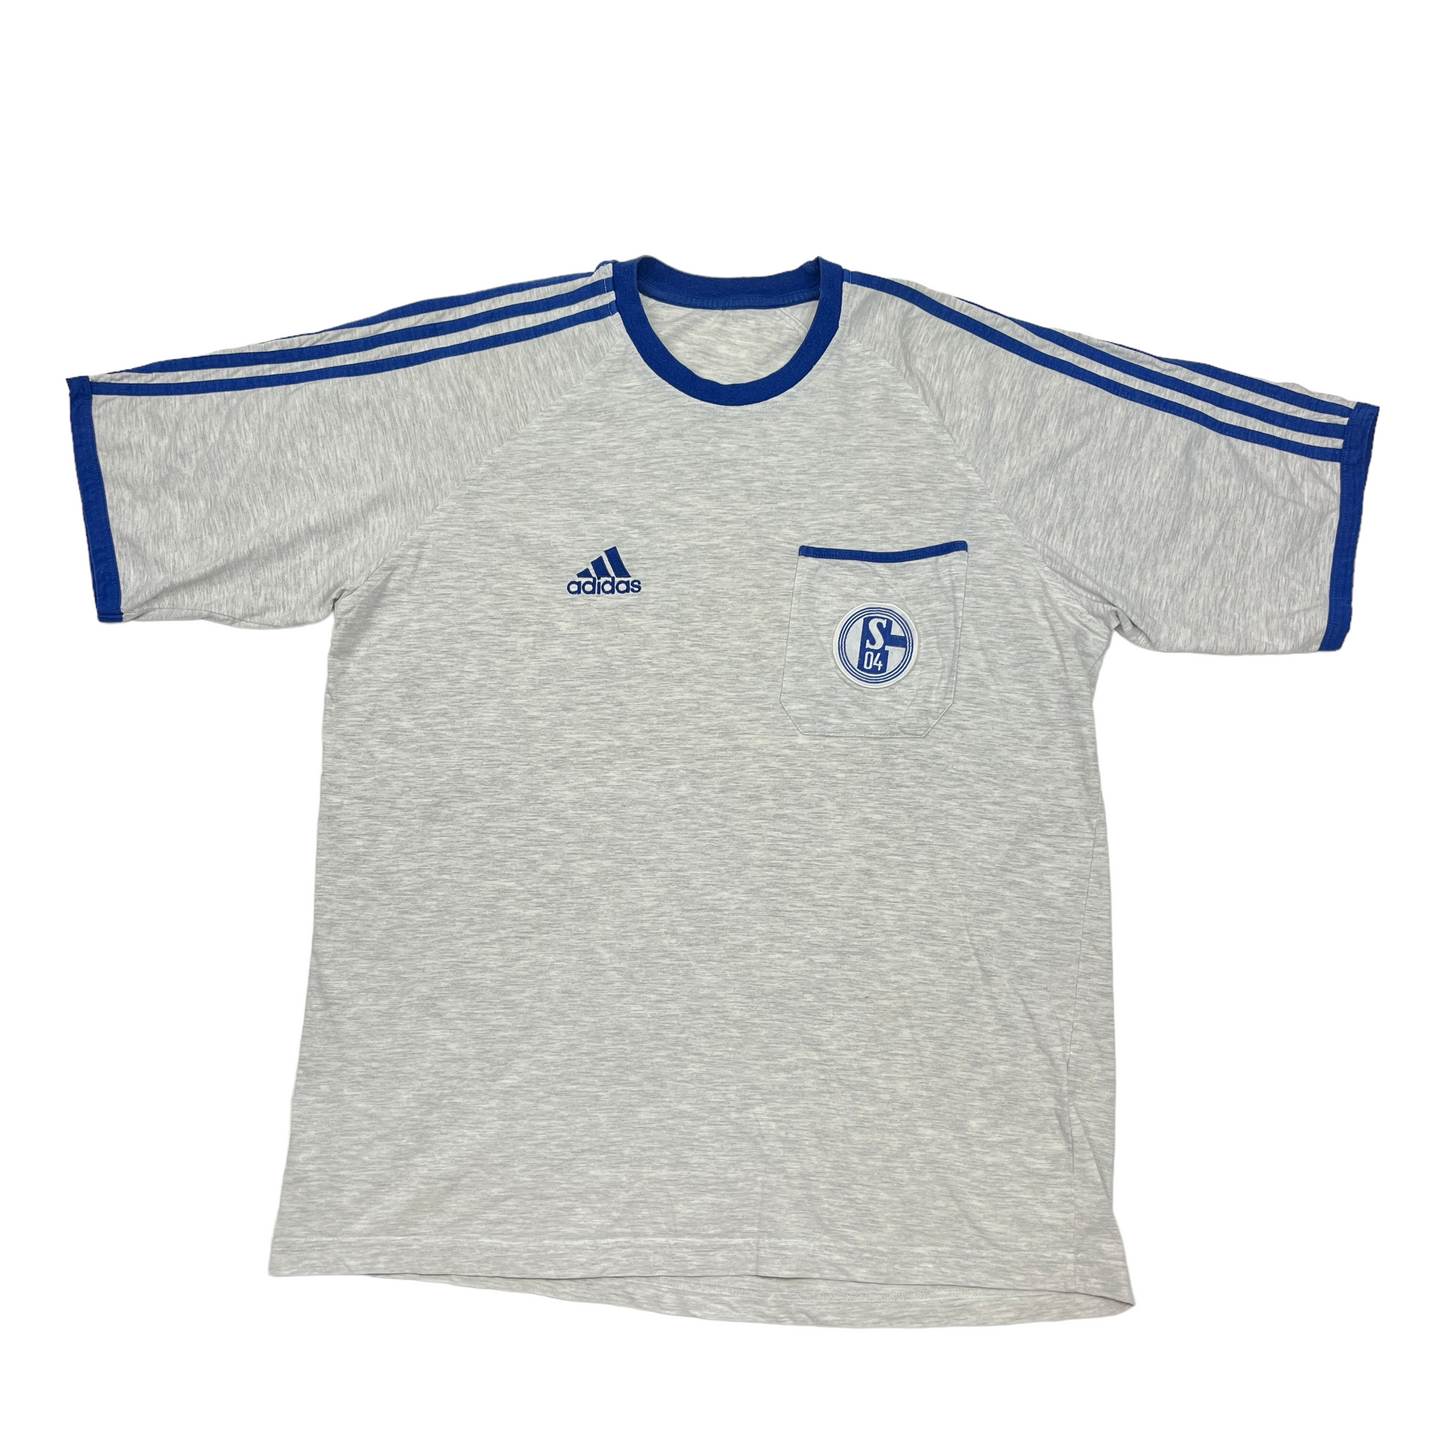 01667 Adidas 90s Schalke 04 Tshirt